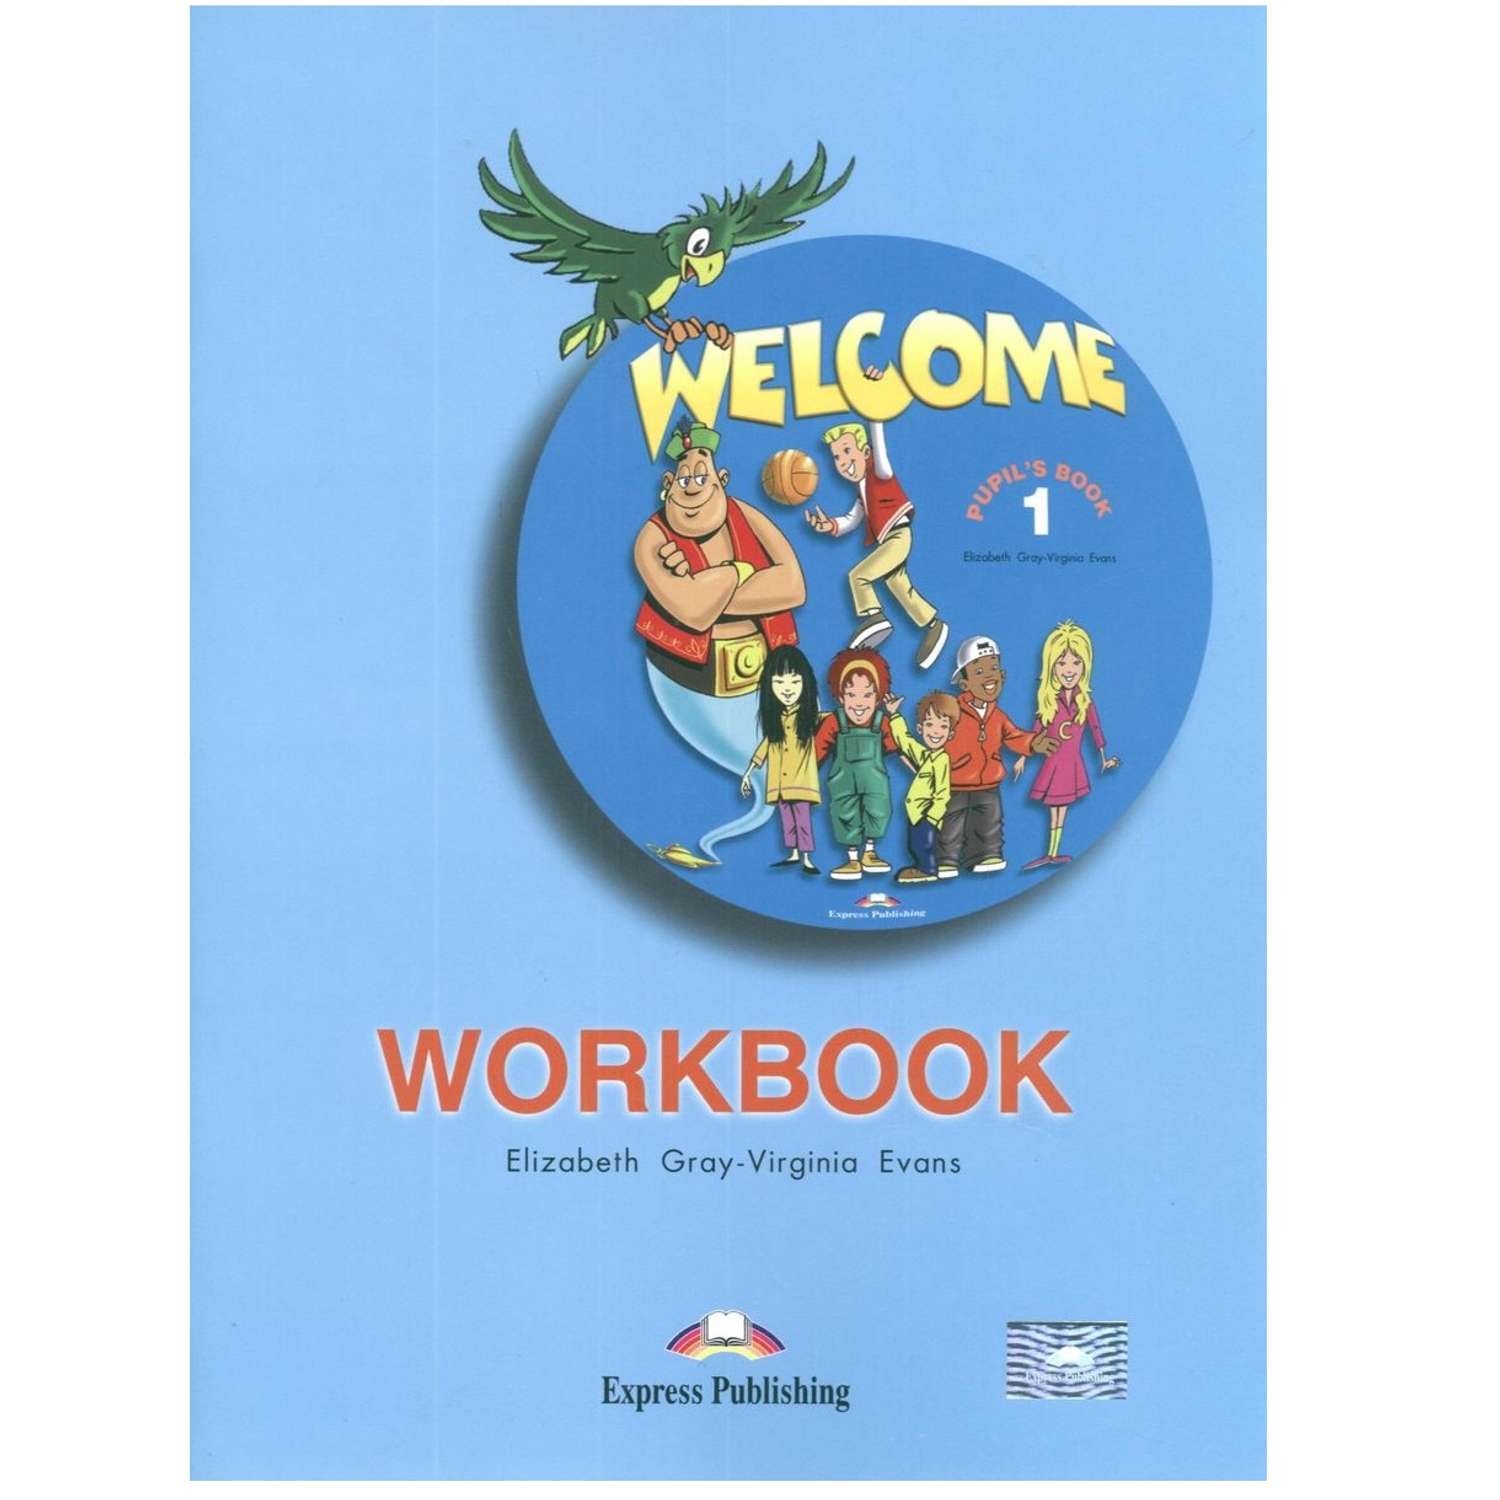 Welcome workbook